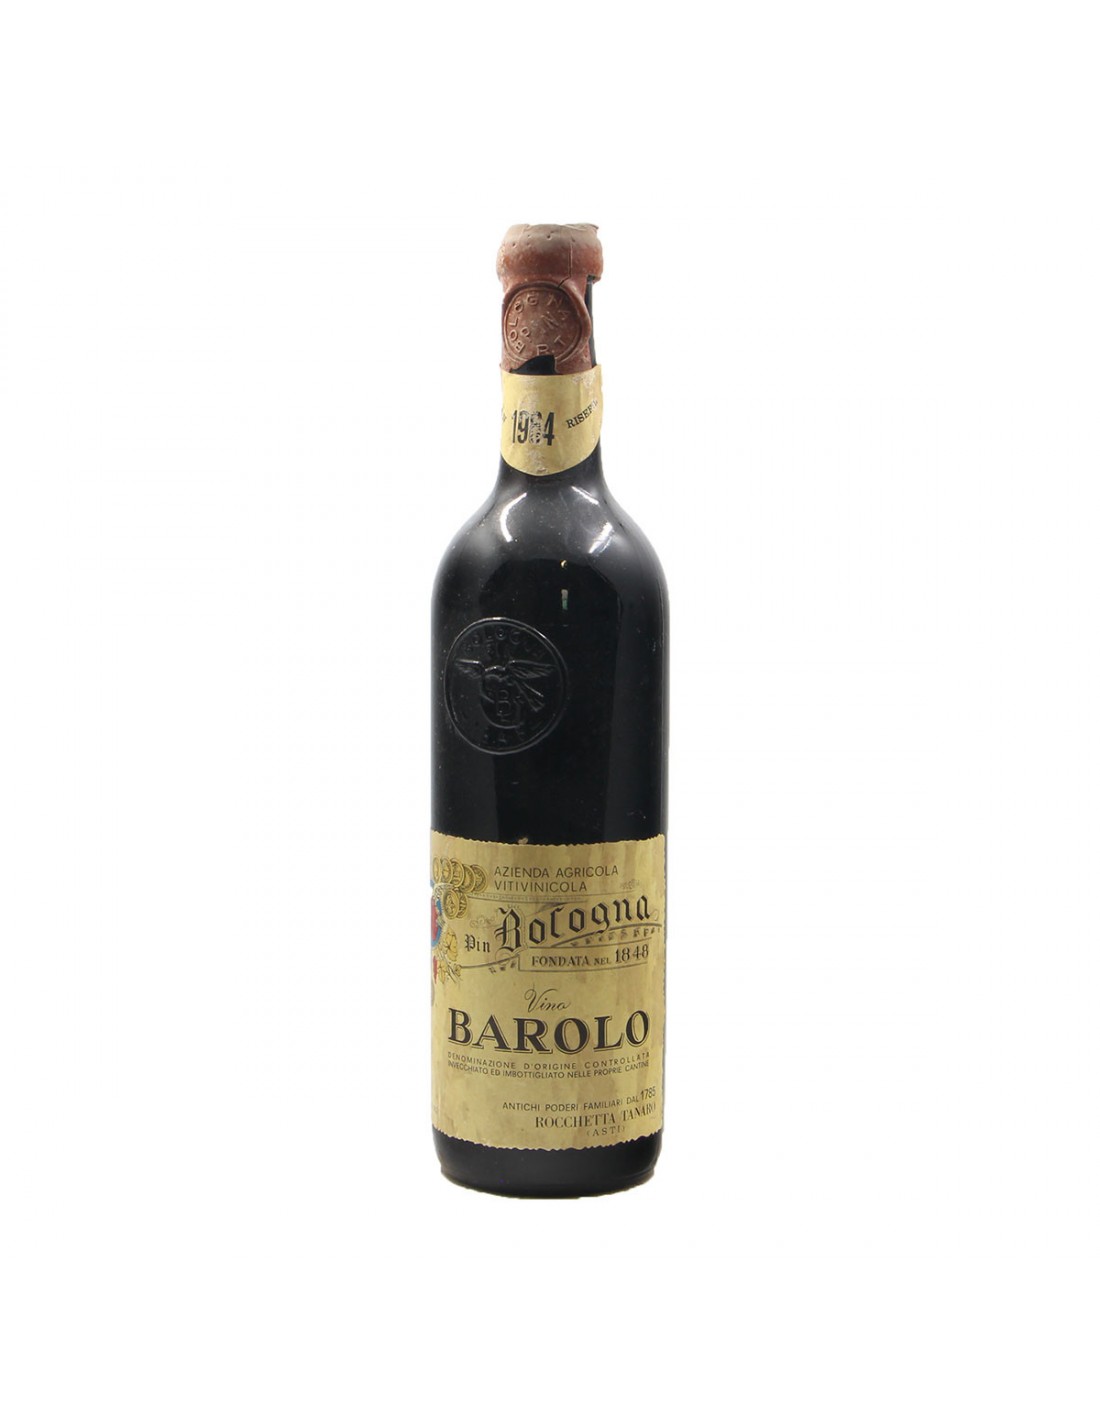 BAROLO GRAN RISERVA 1964 PINBOLOGNA Grandi Bottiglie